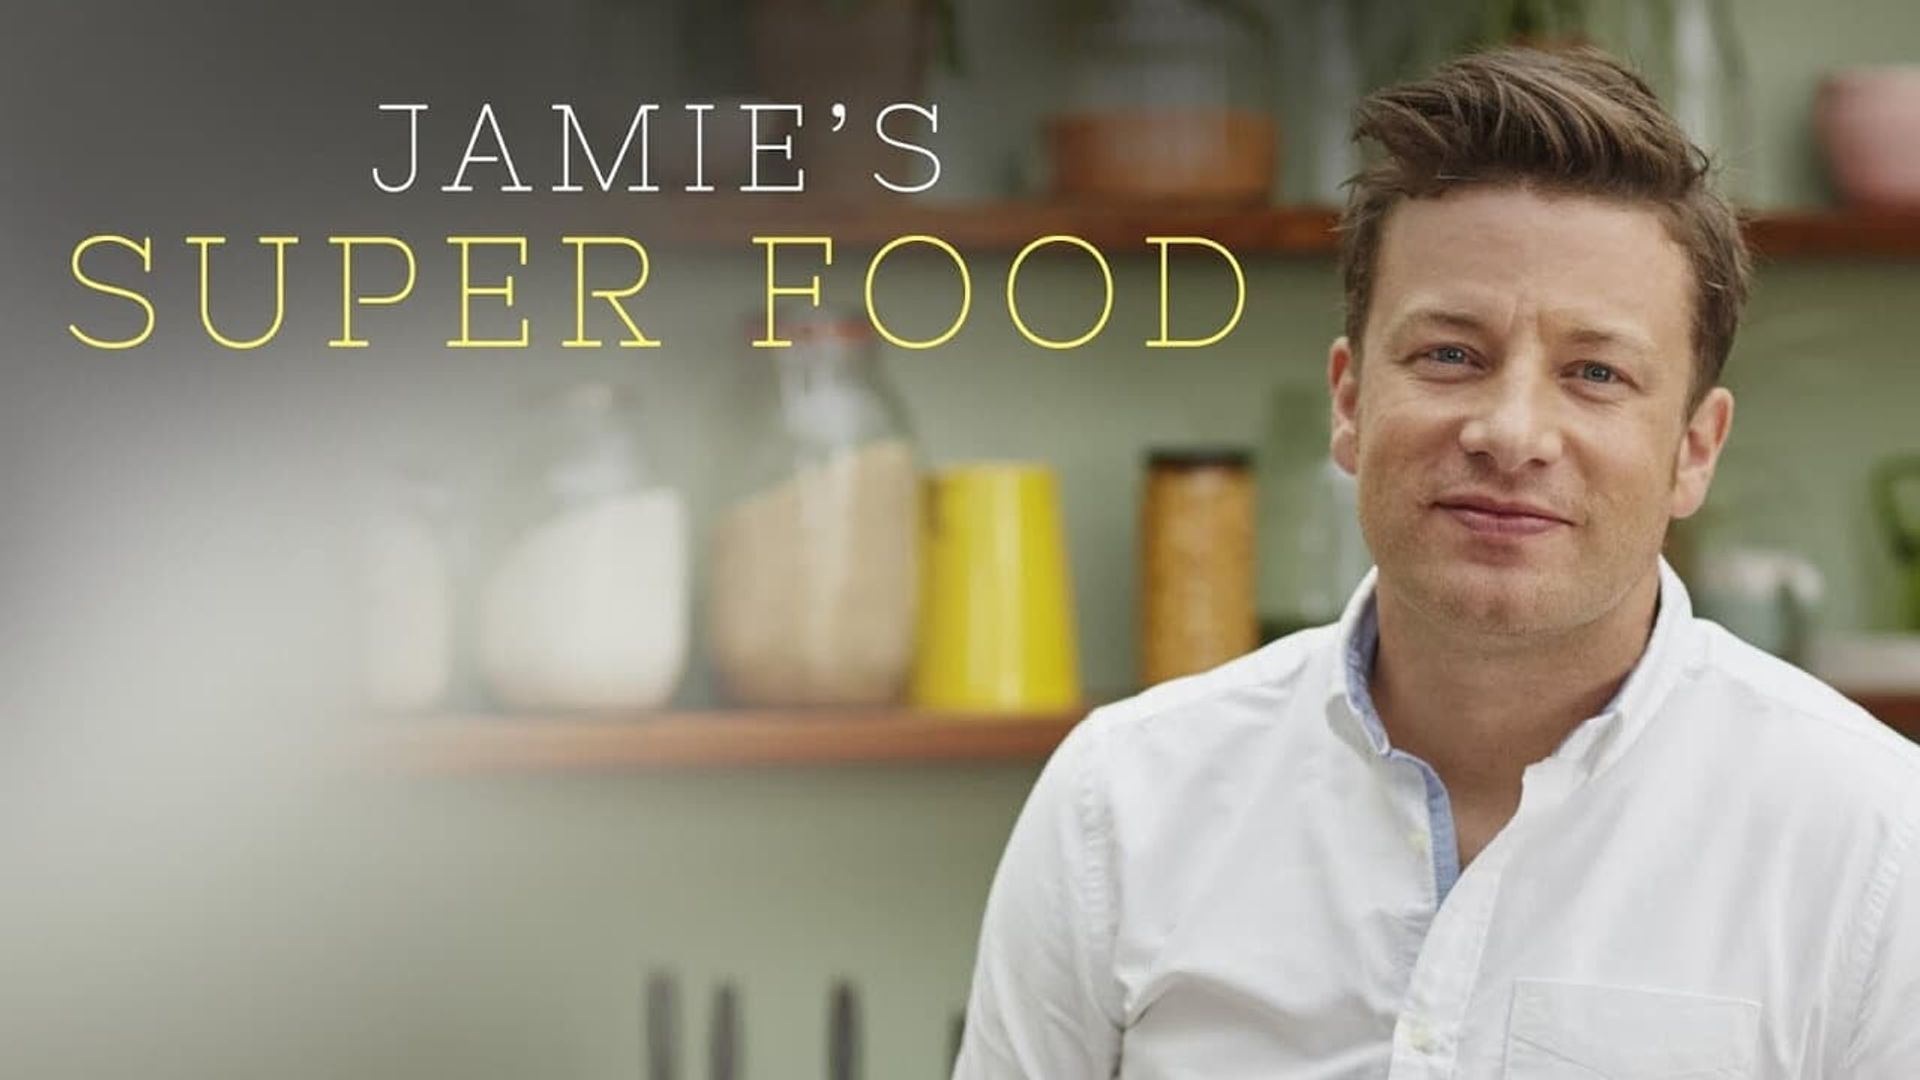 Jamie's Super Food background